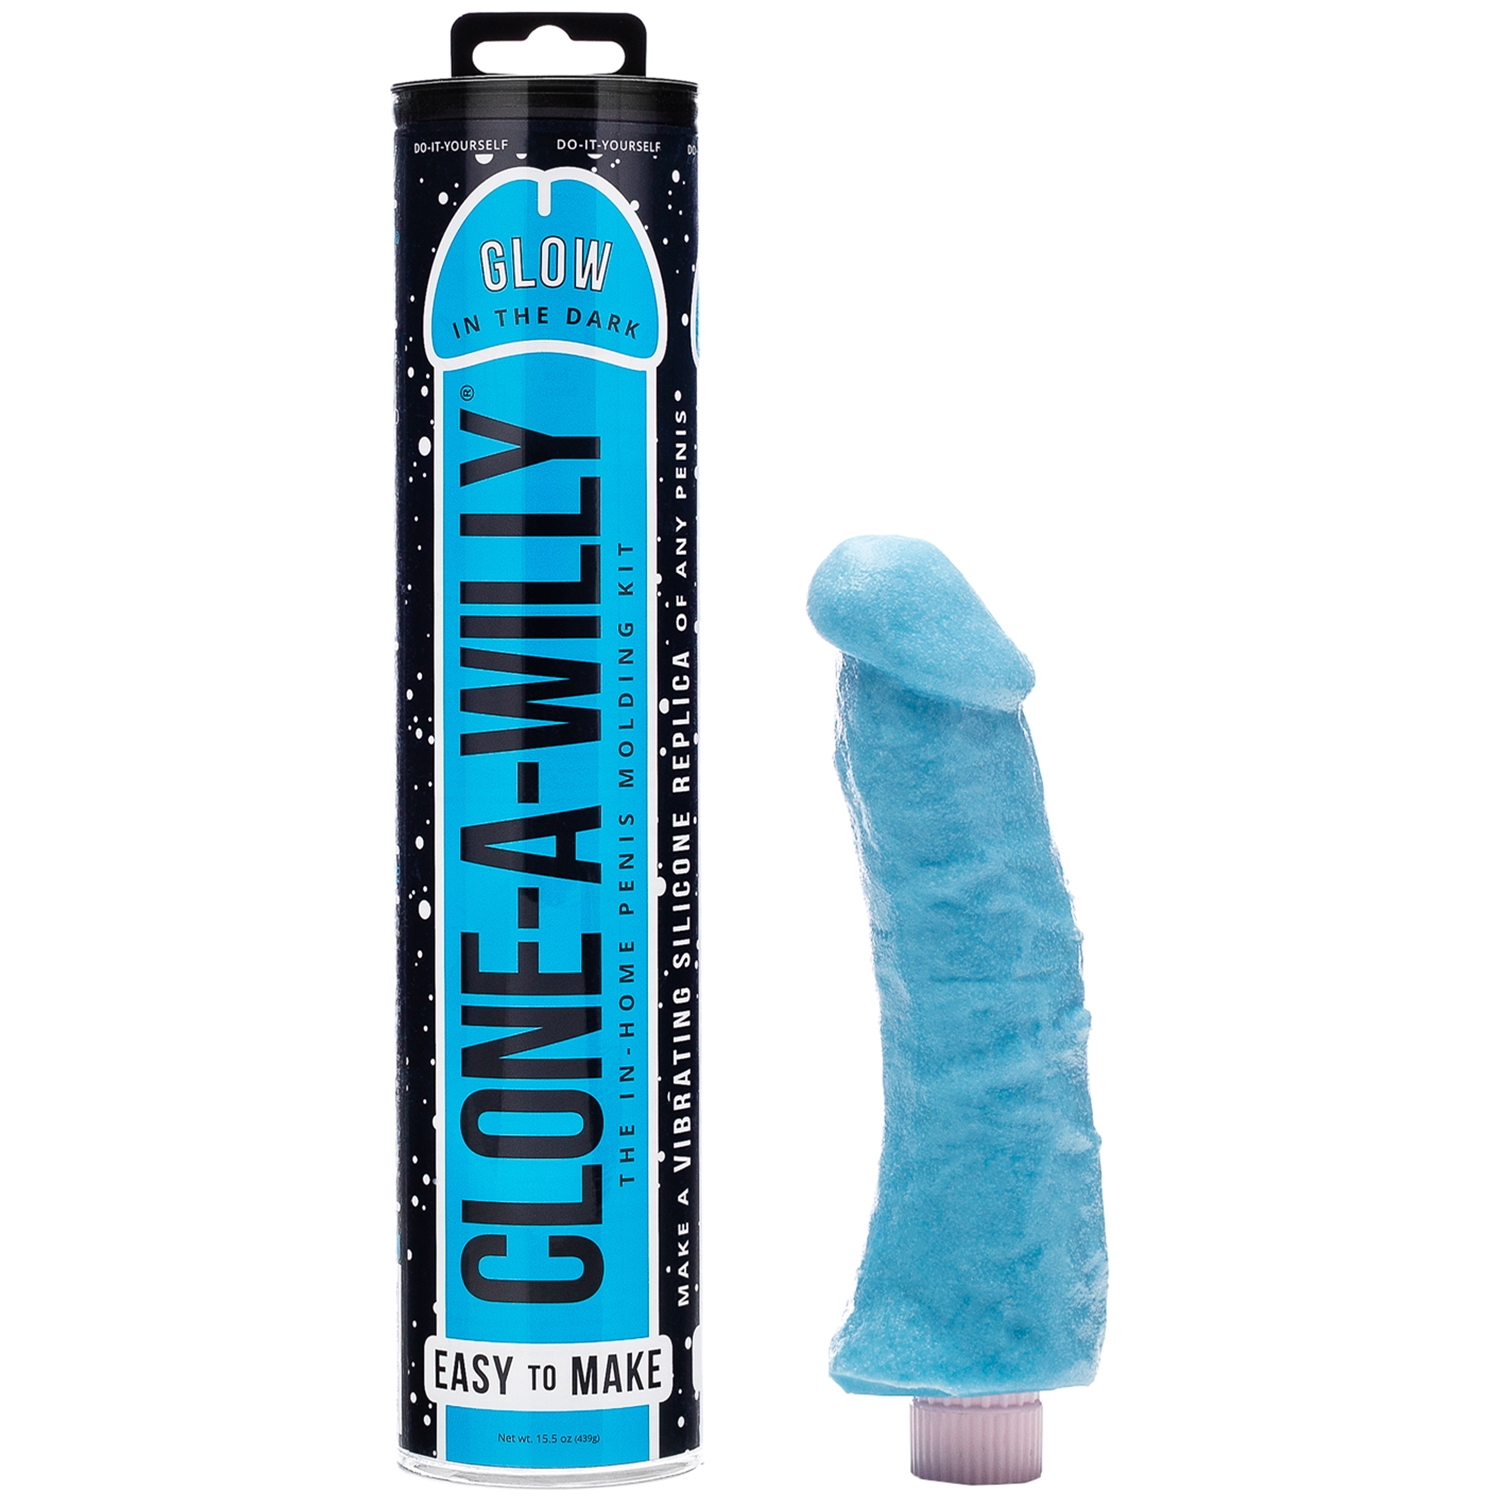 Clone-A-Willy DIY Homemade Dildo Clone Kit Glow In The Dark Blue - Blå | Män//Favoriter//Par//Par Sexleksaker//Gör Din Egen Dildo//Clone-A-Willy | Intimast